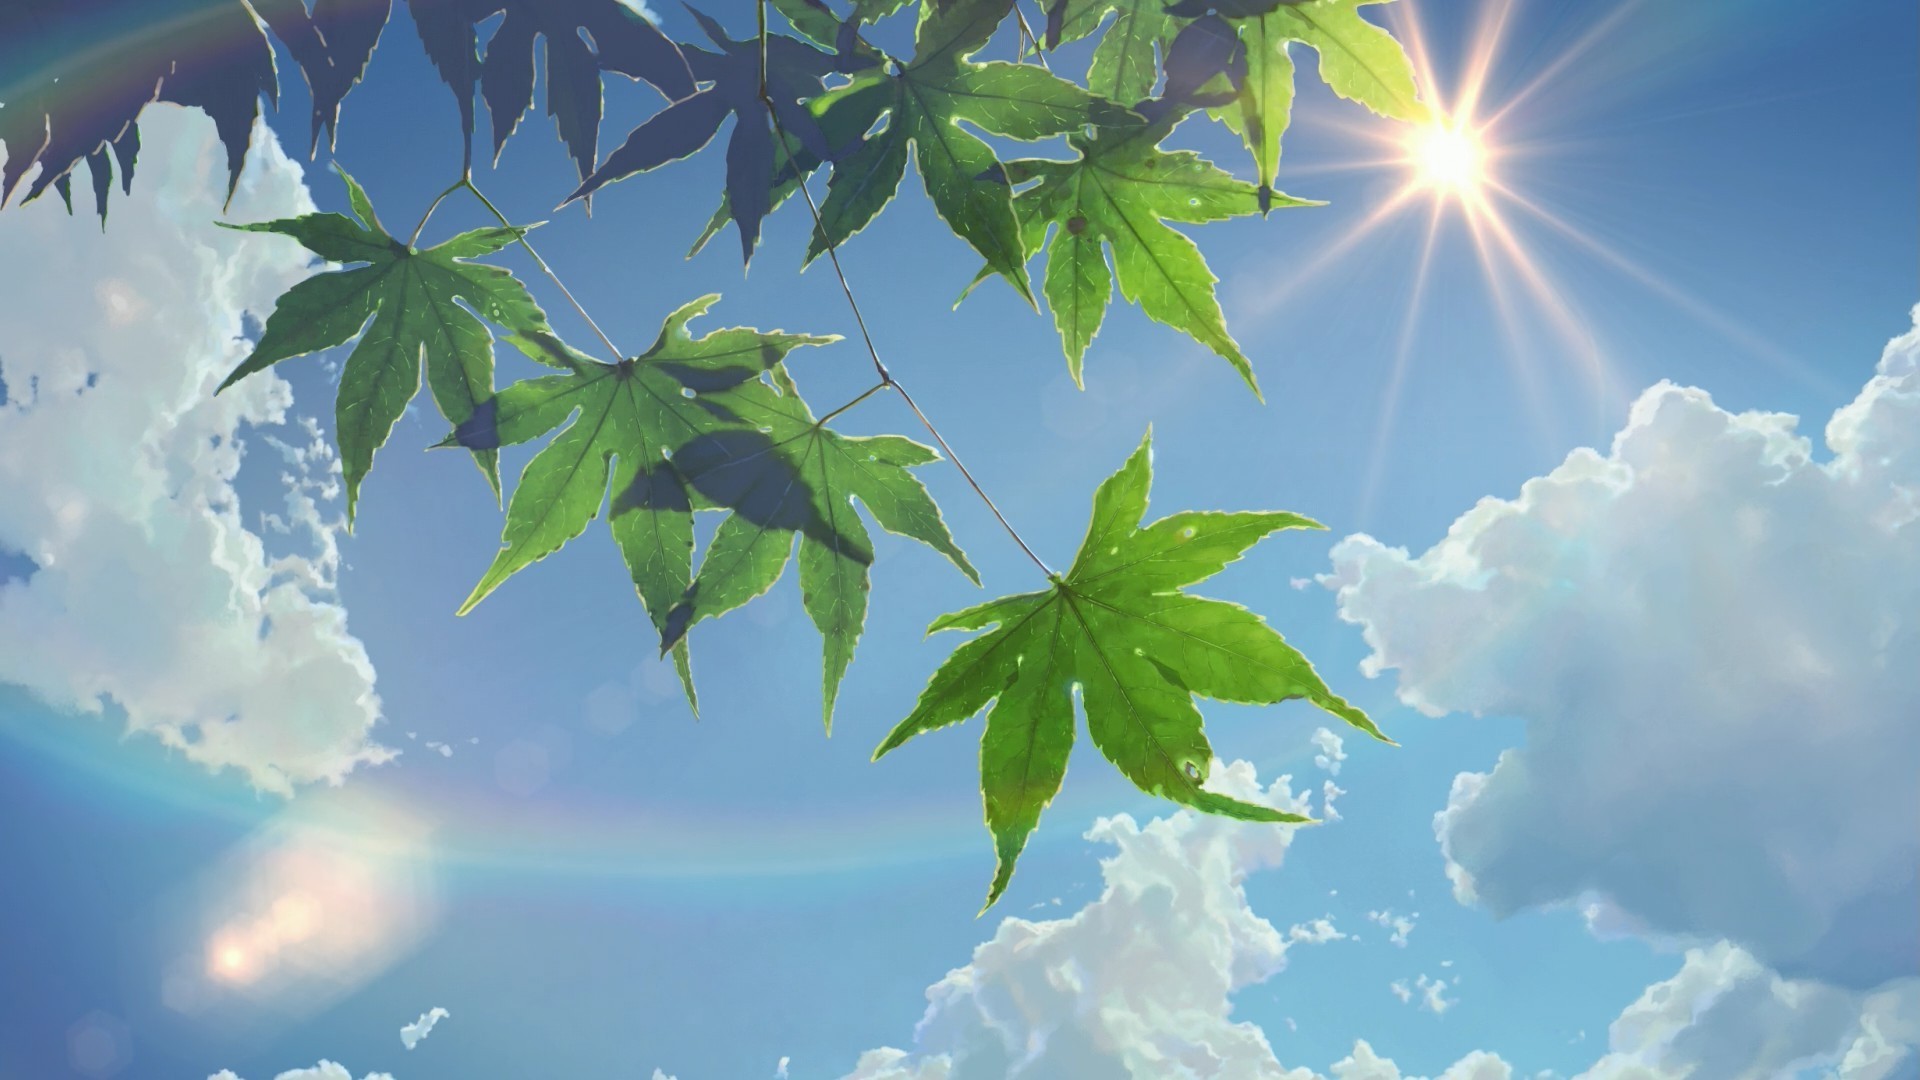 makoto shinkai wallpaper,sky,leaf,tree,nature,green